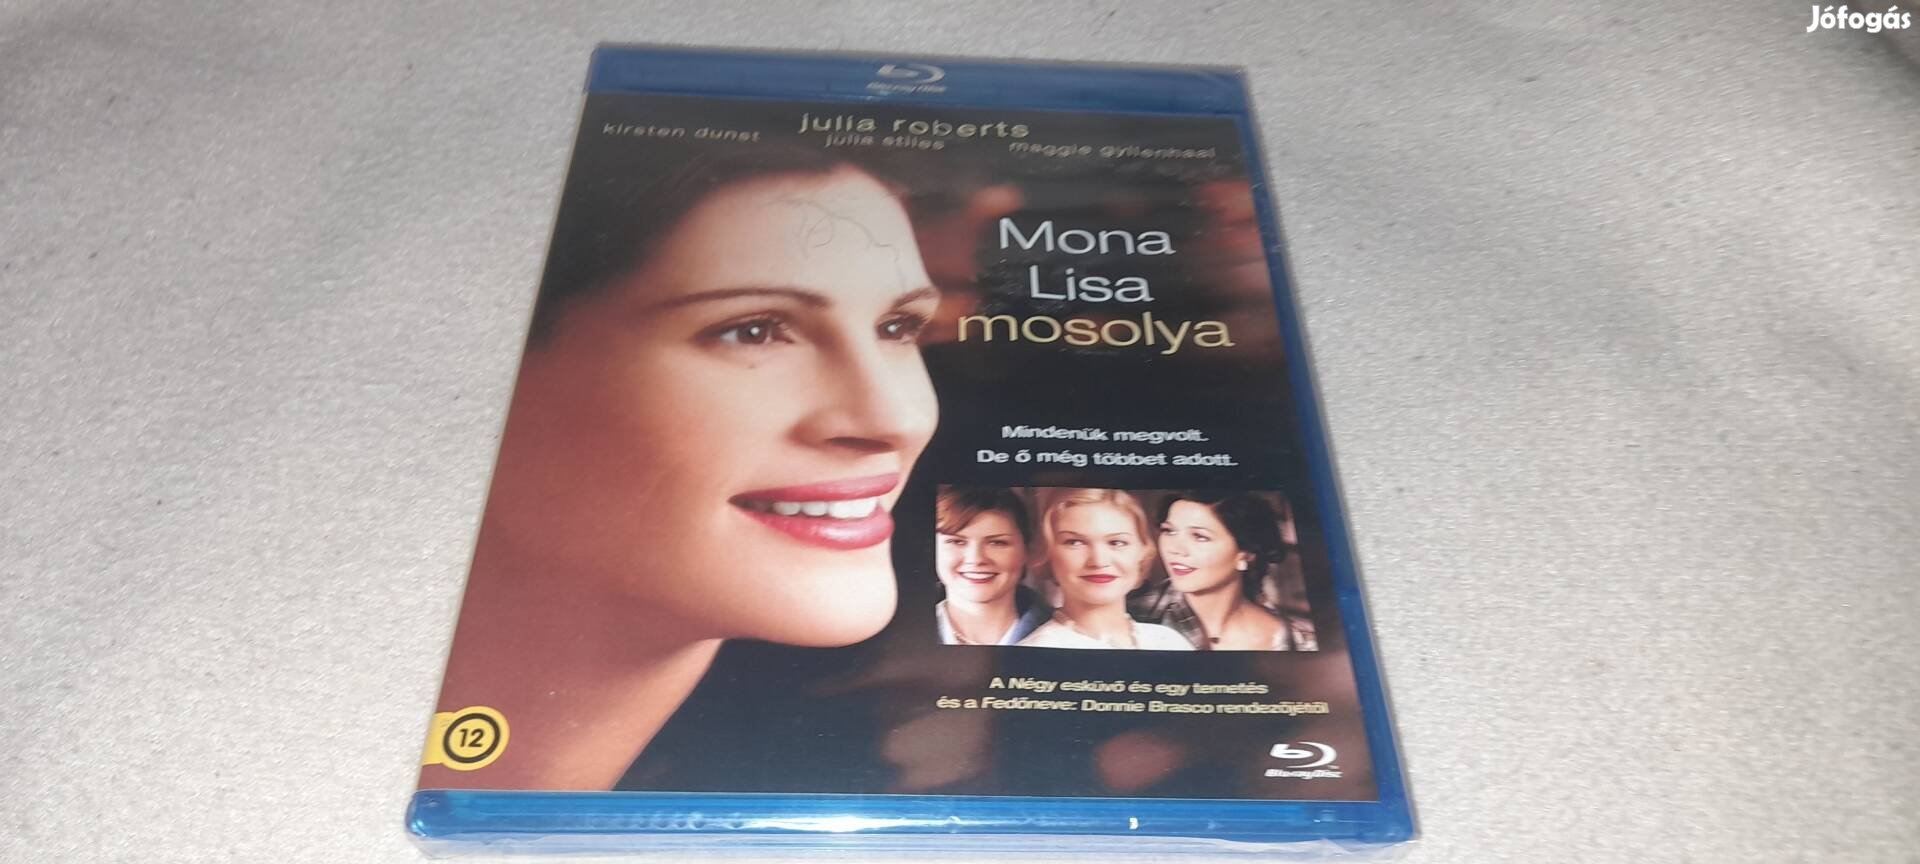 Mona Lisa mosolya Bontatlan Magyar kiadású  Blu ray film